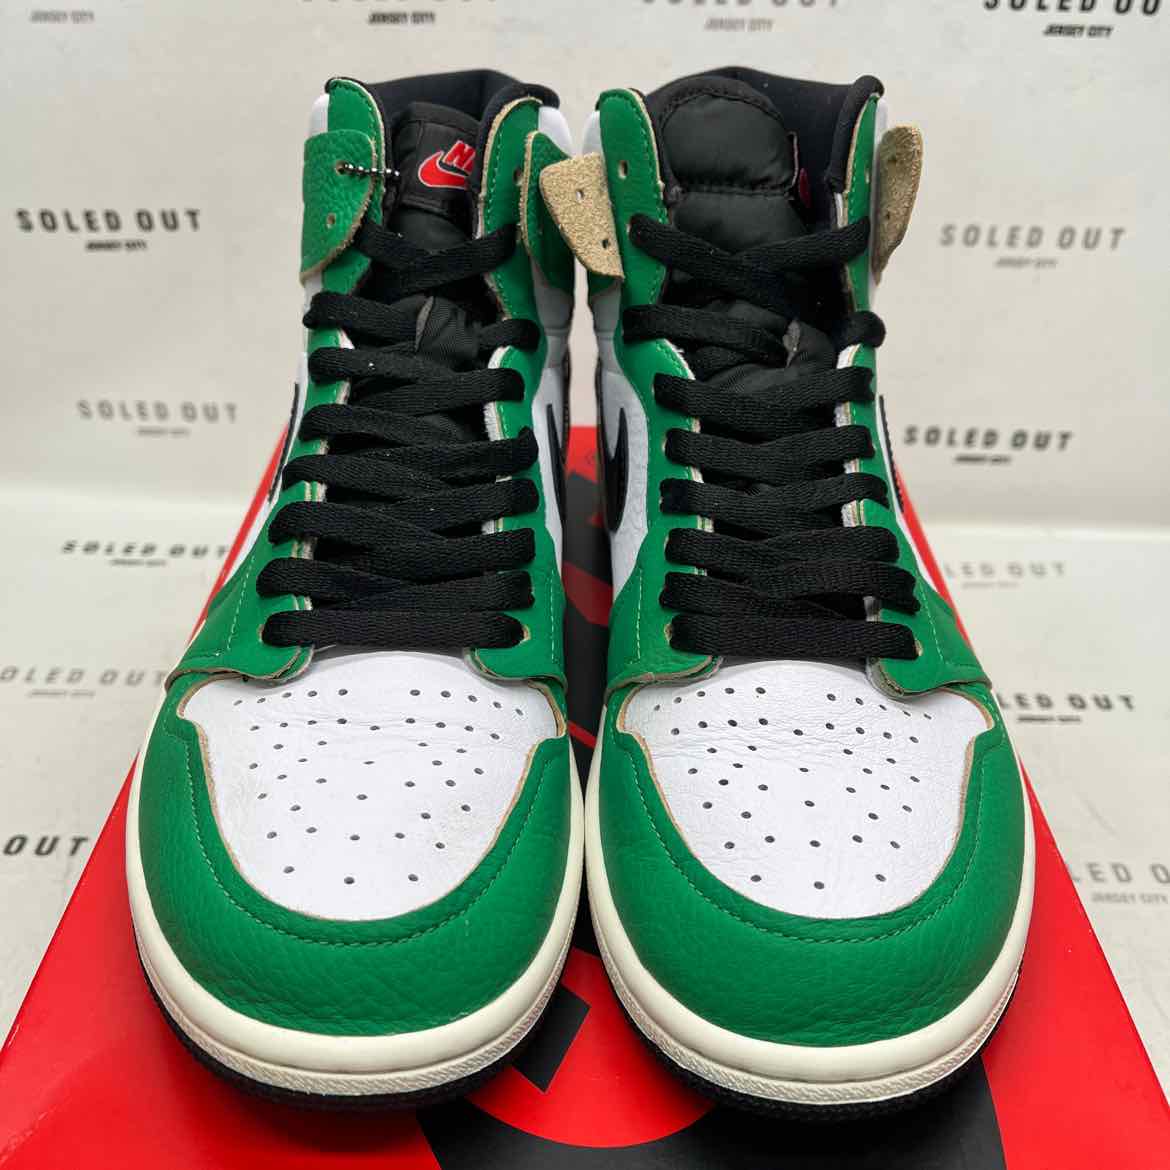 Air Jordan (W) 1 Retro High OG "Lucky Green" 2020 Used Size 9.5W